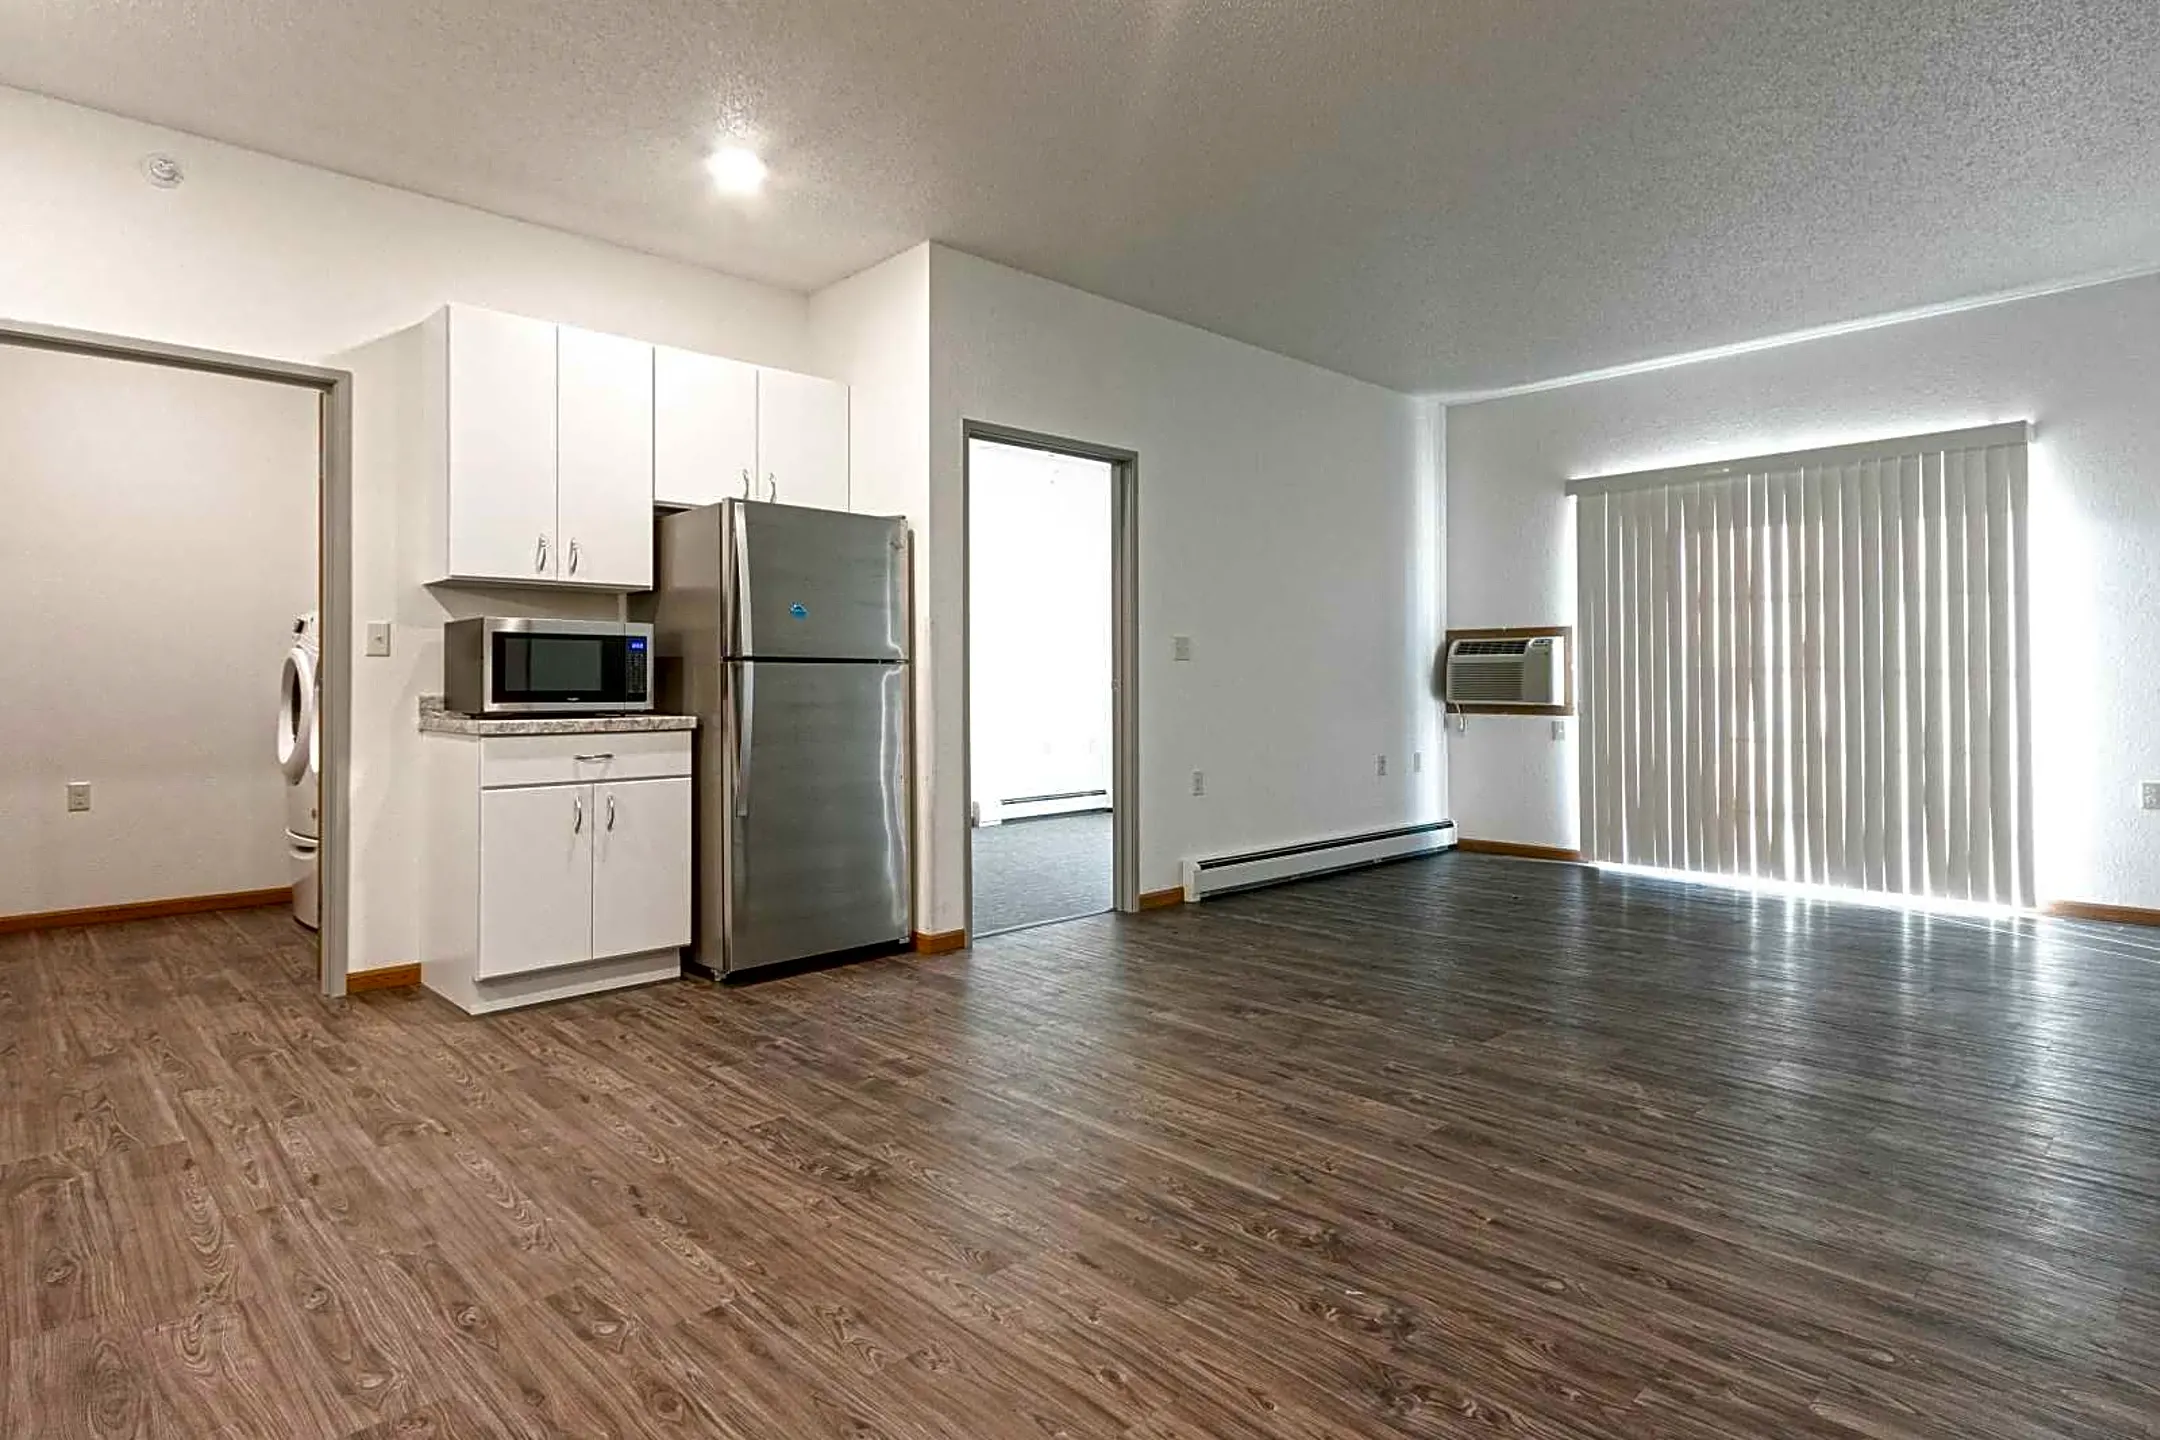 Kitchen - Homefield Senior Living Apartments - Fargo, ND